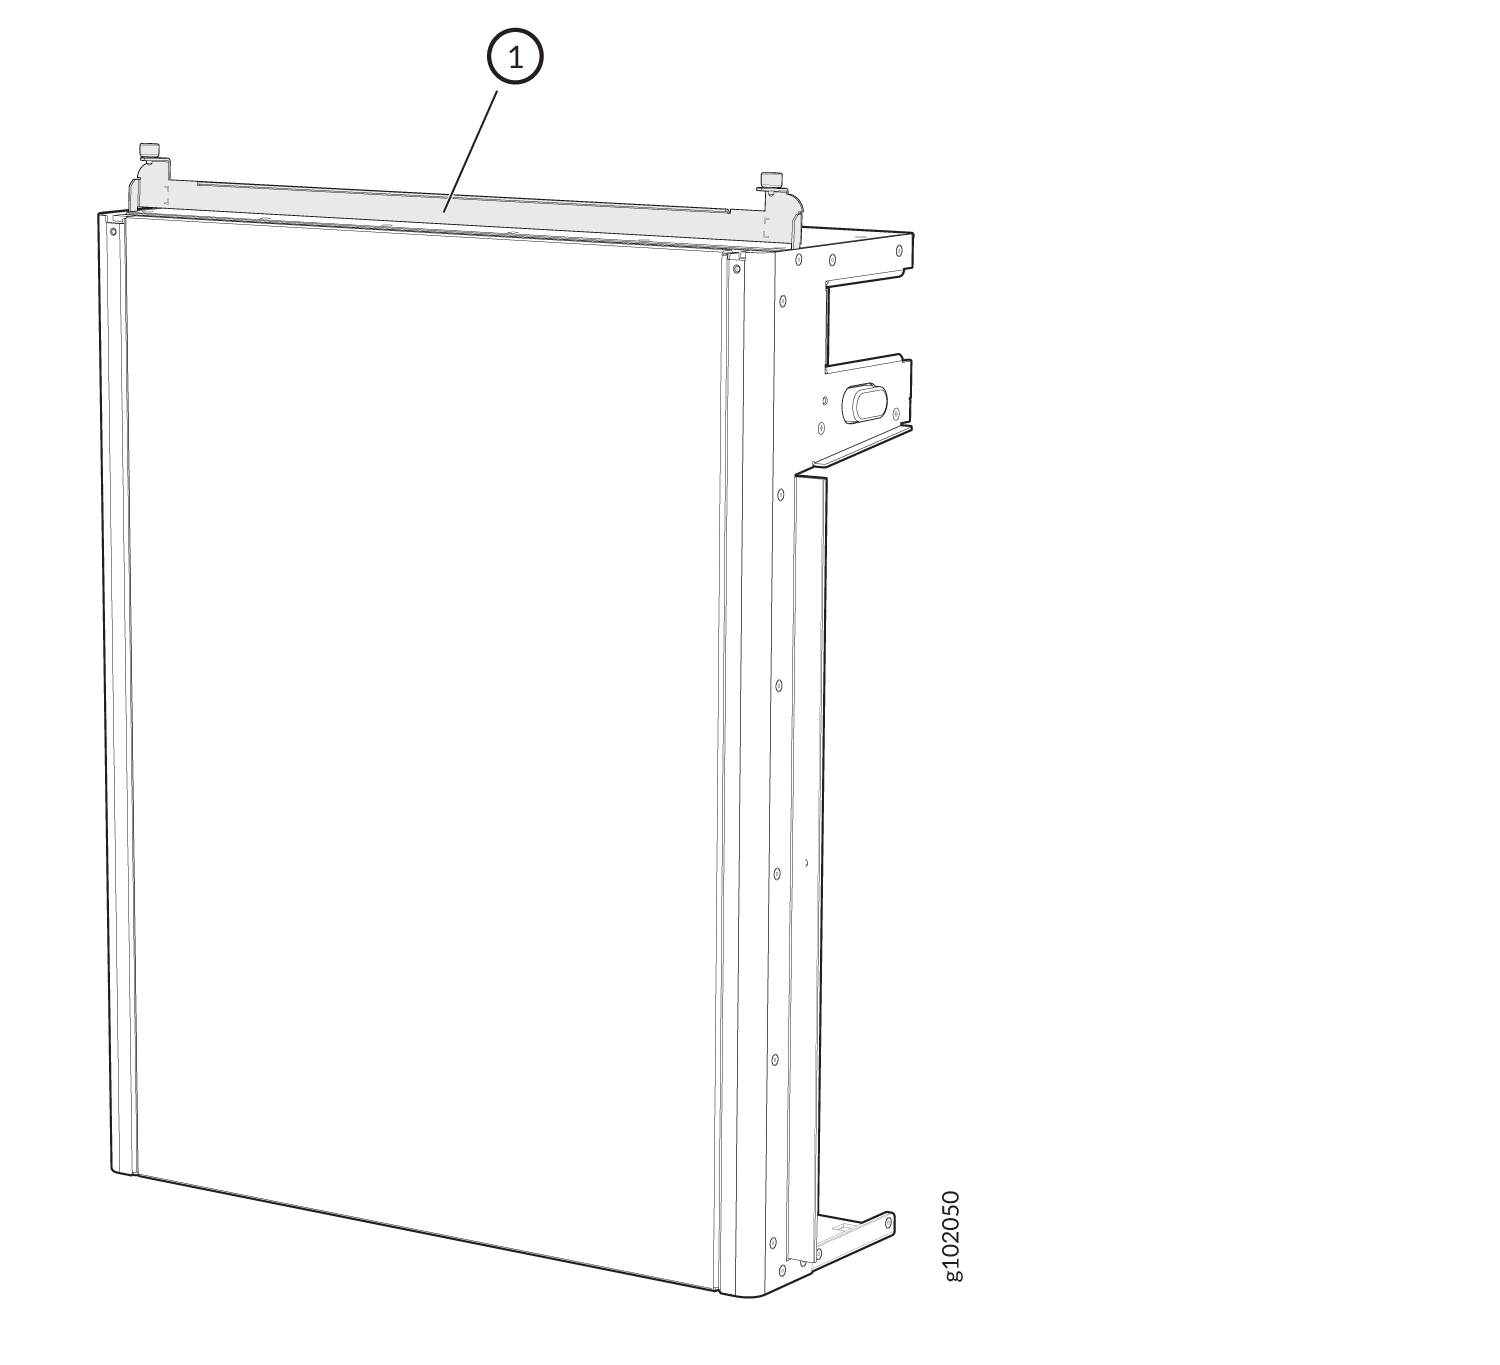 Air Filter Frame in an MX10008 Front Door